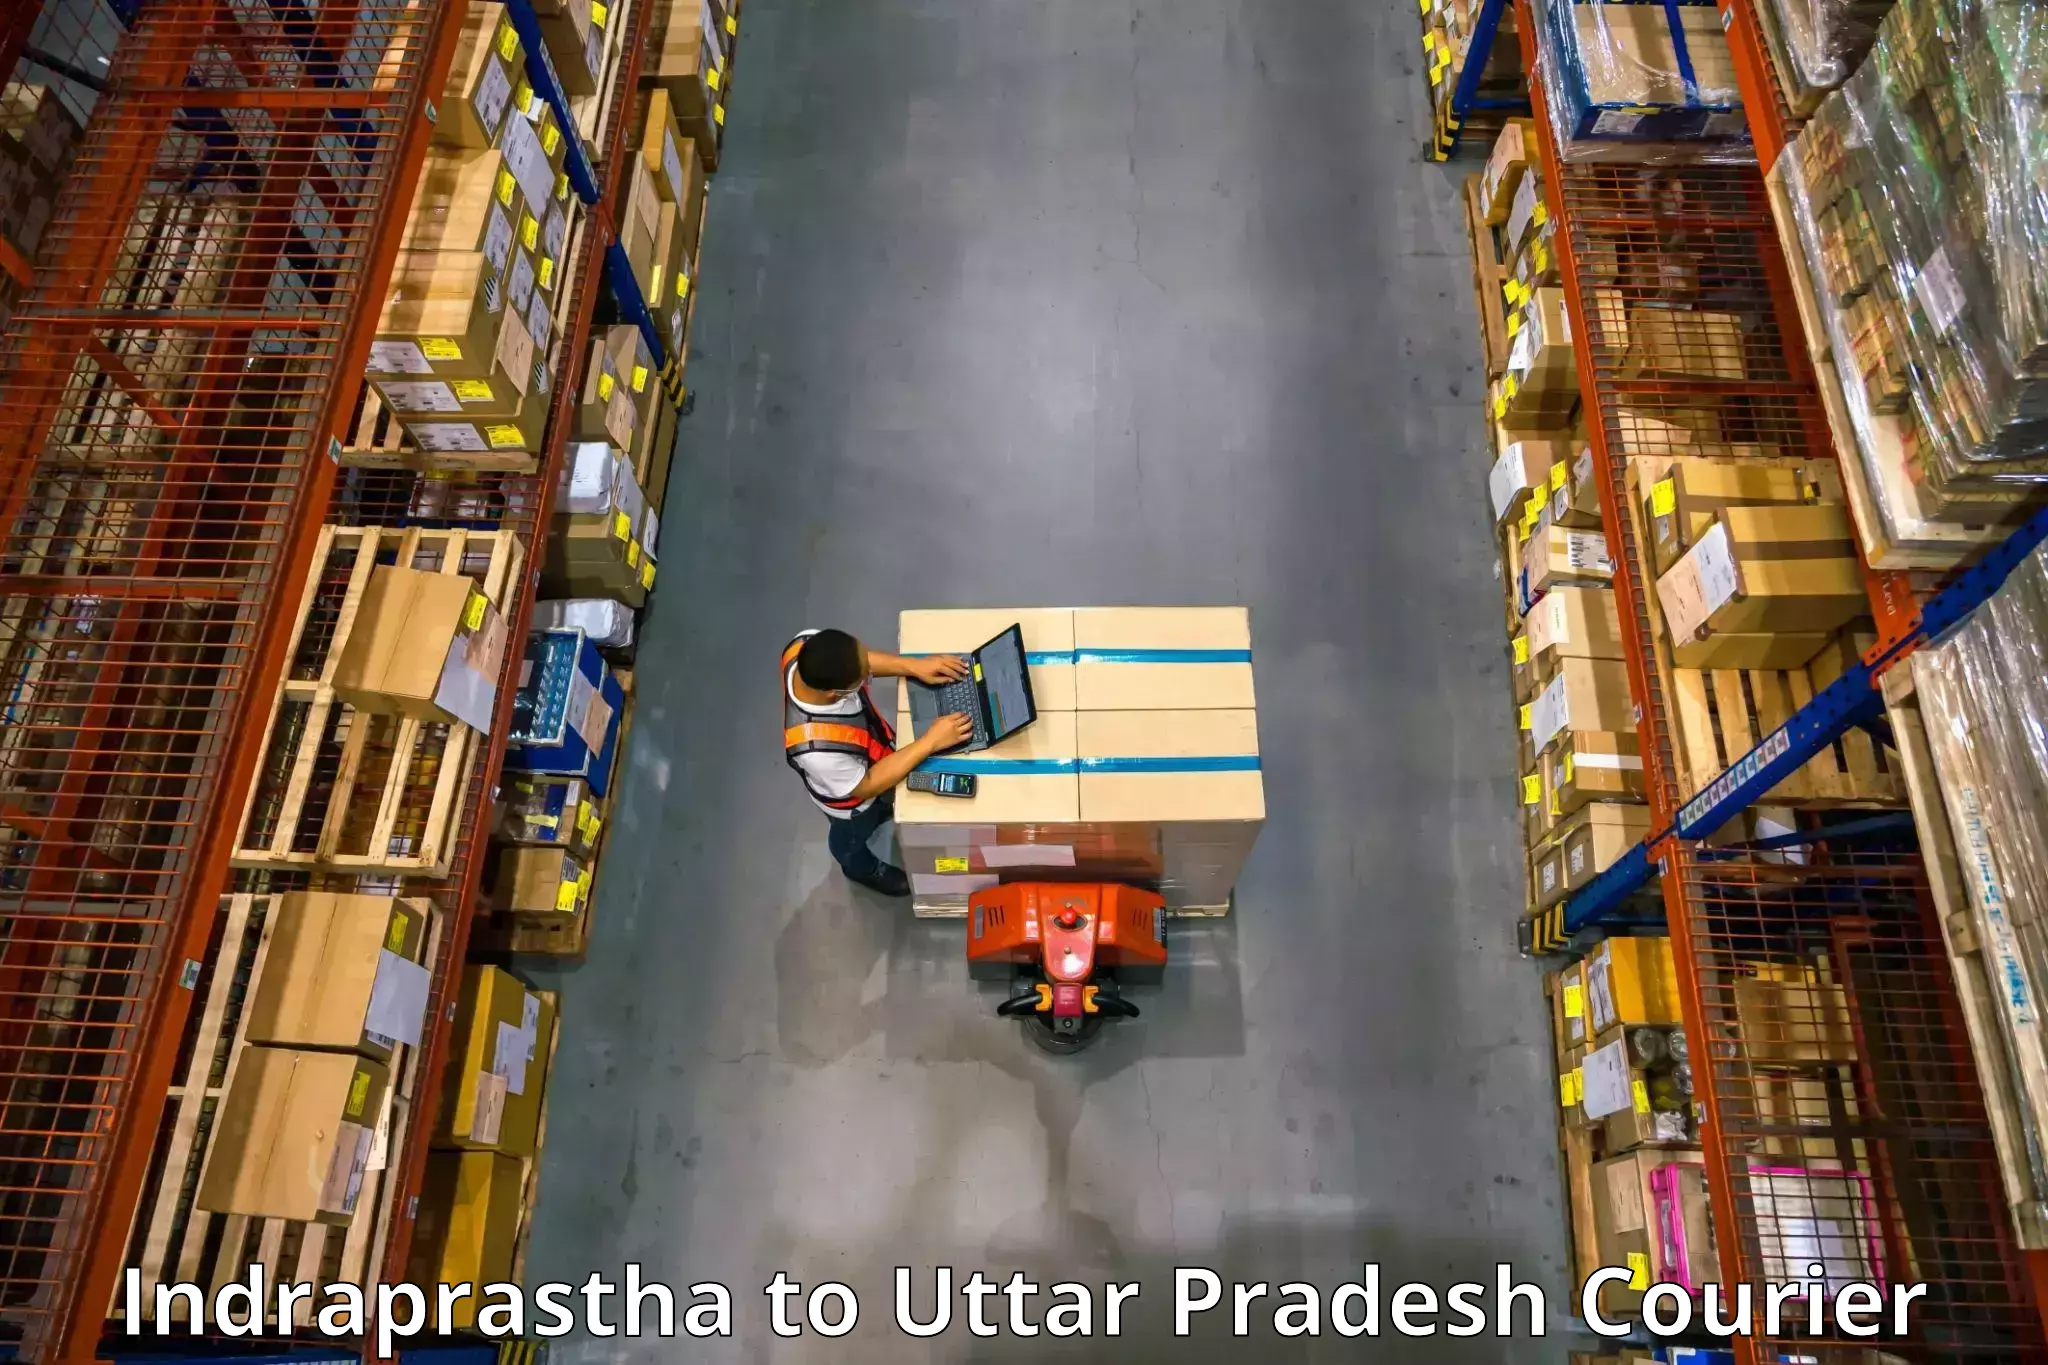 Quality moving company Indraprastha to Noida